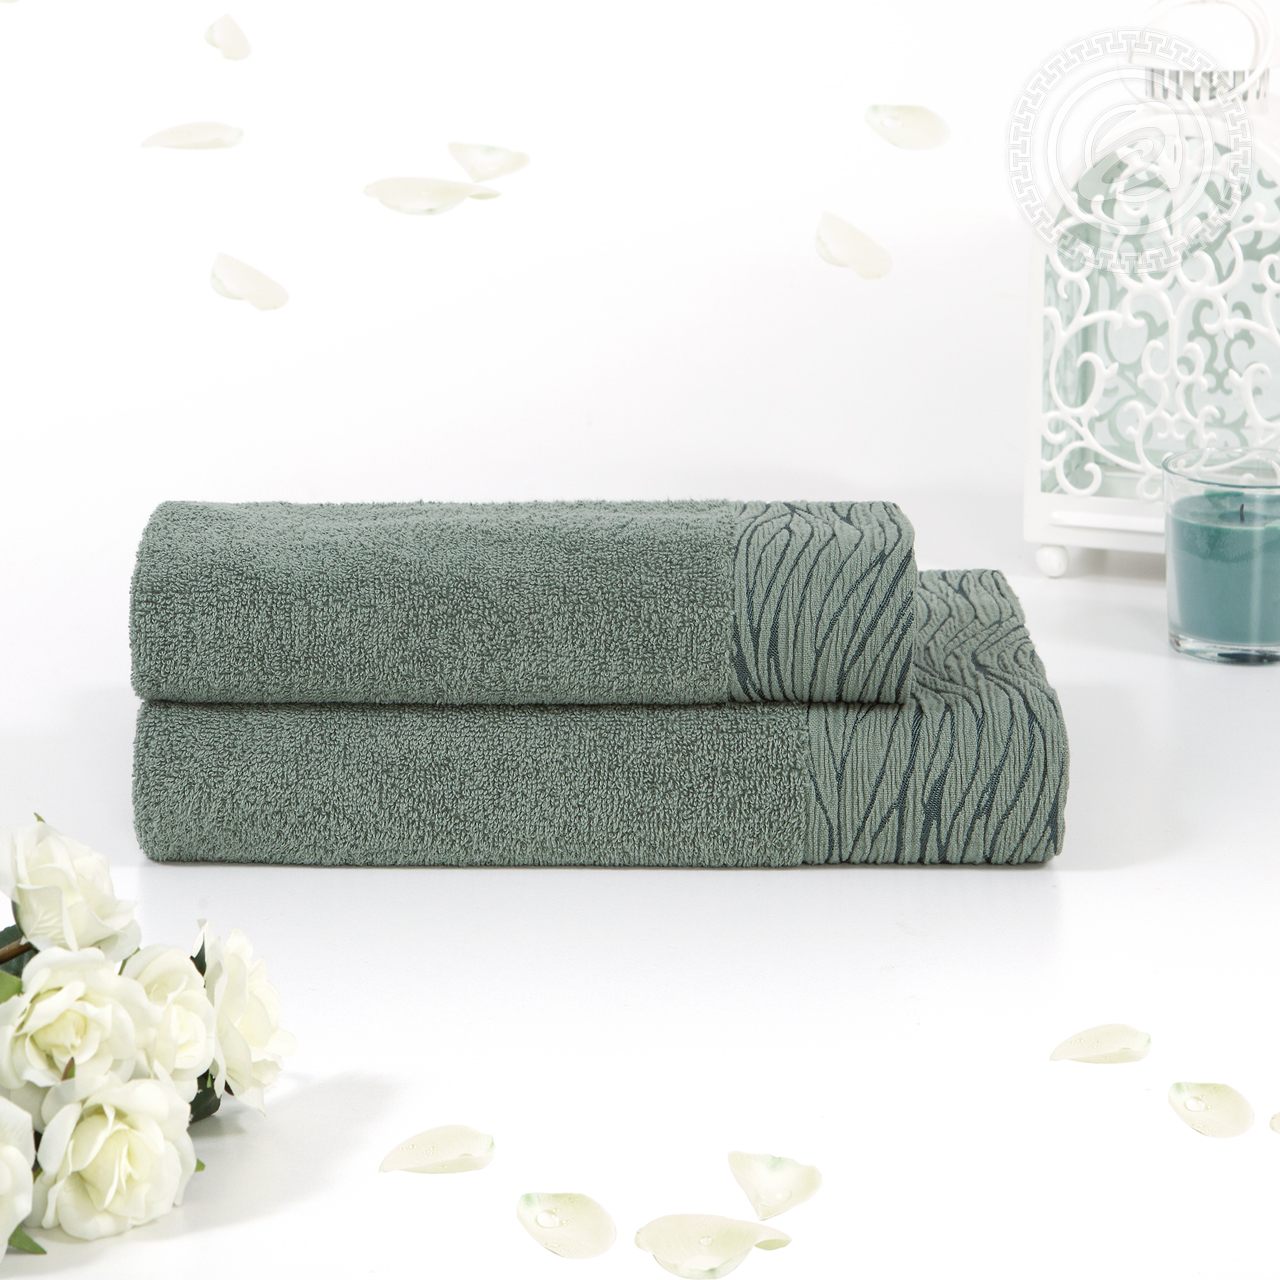 Модерн полотенце махровое (Турция) оливковый